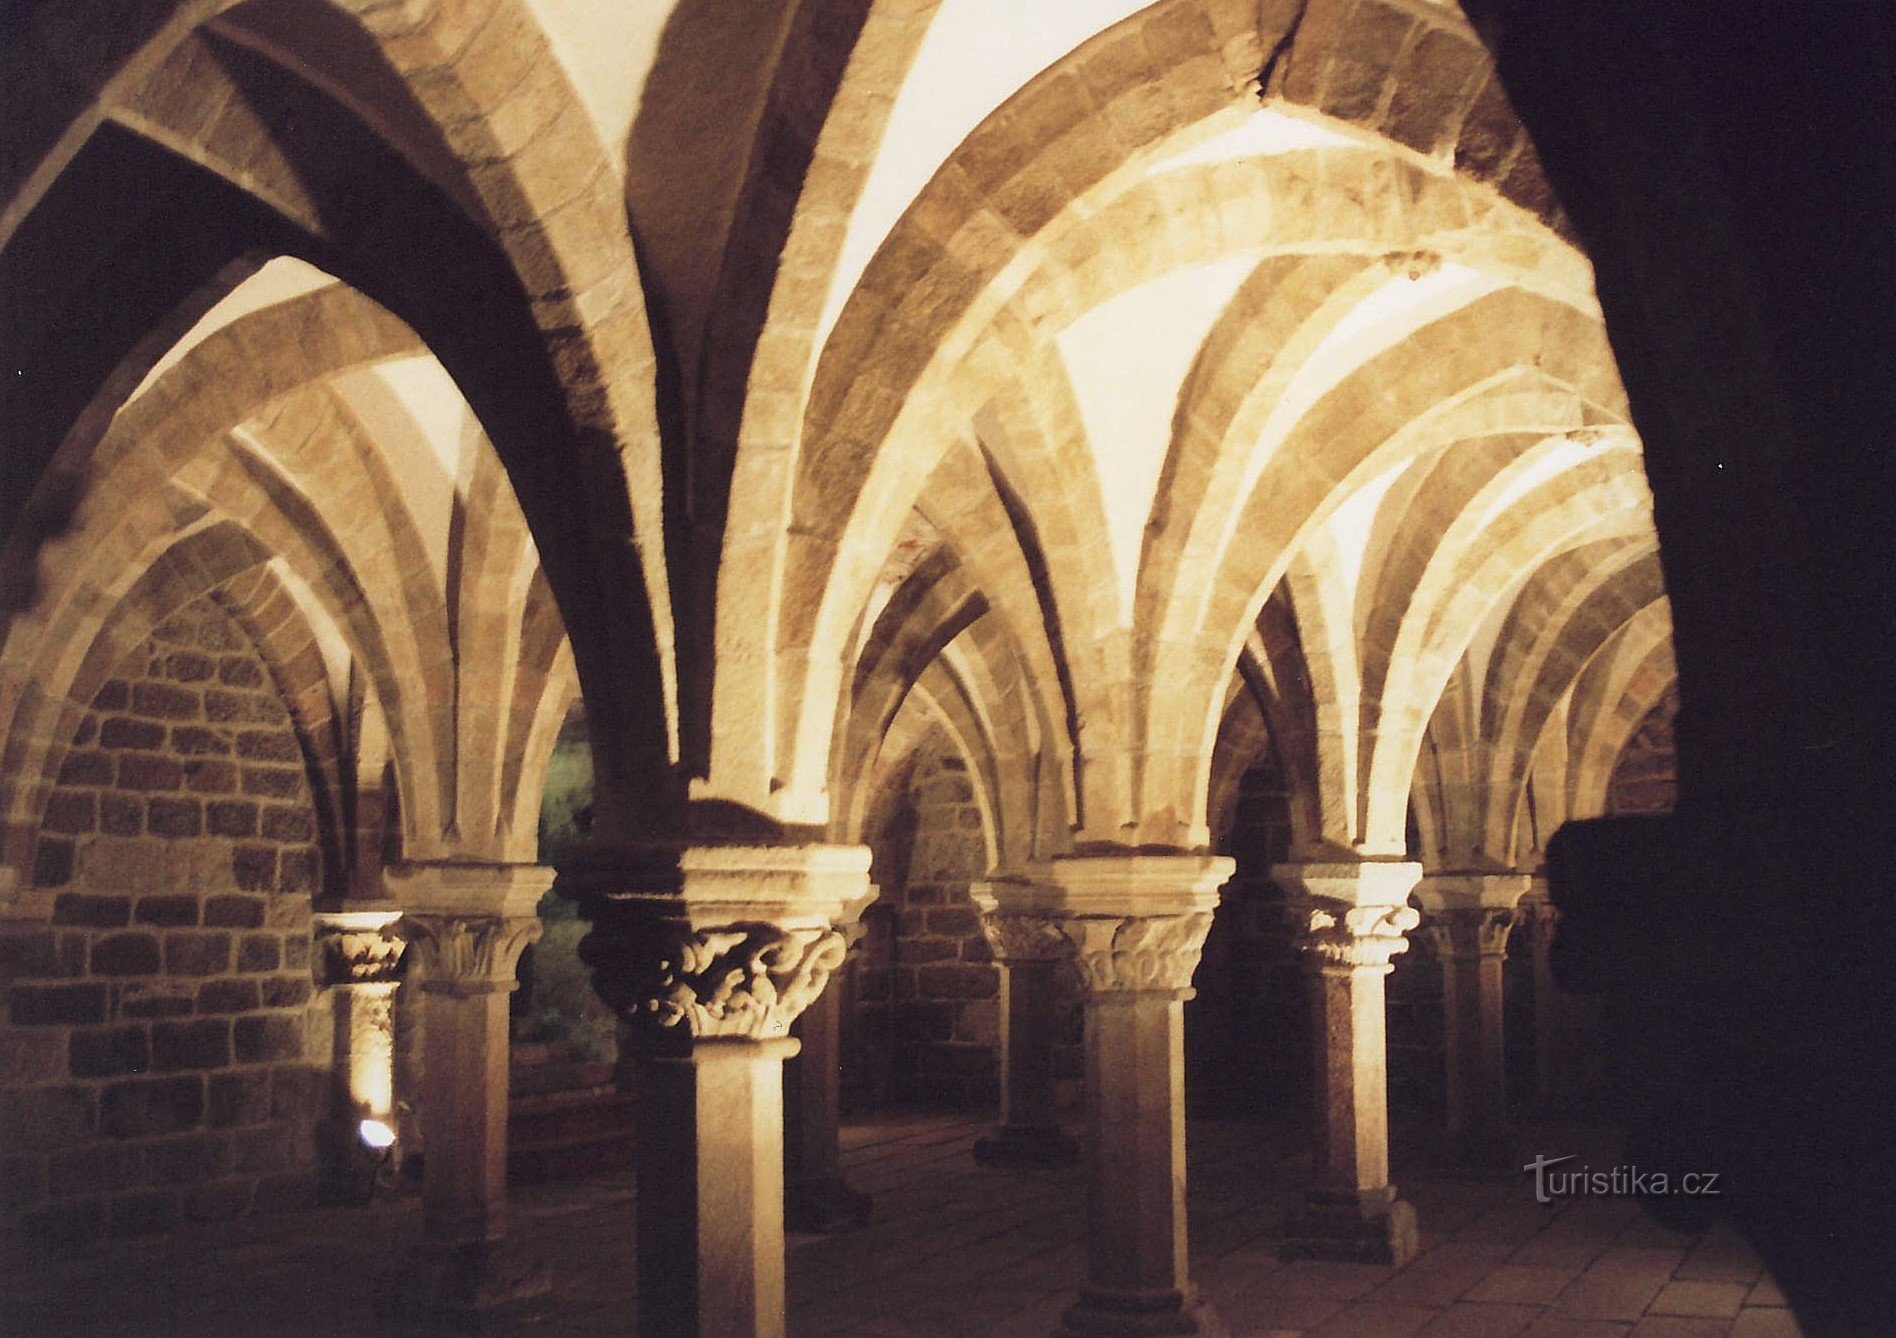 Třebíč – Romanesque crypt